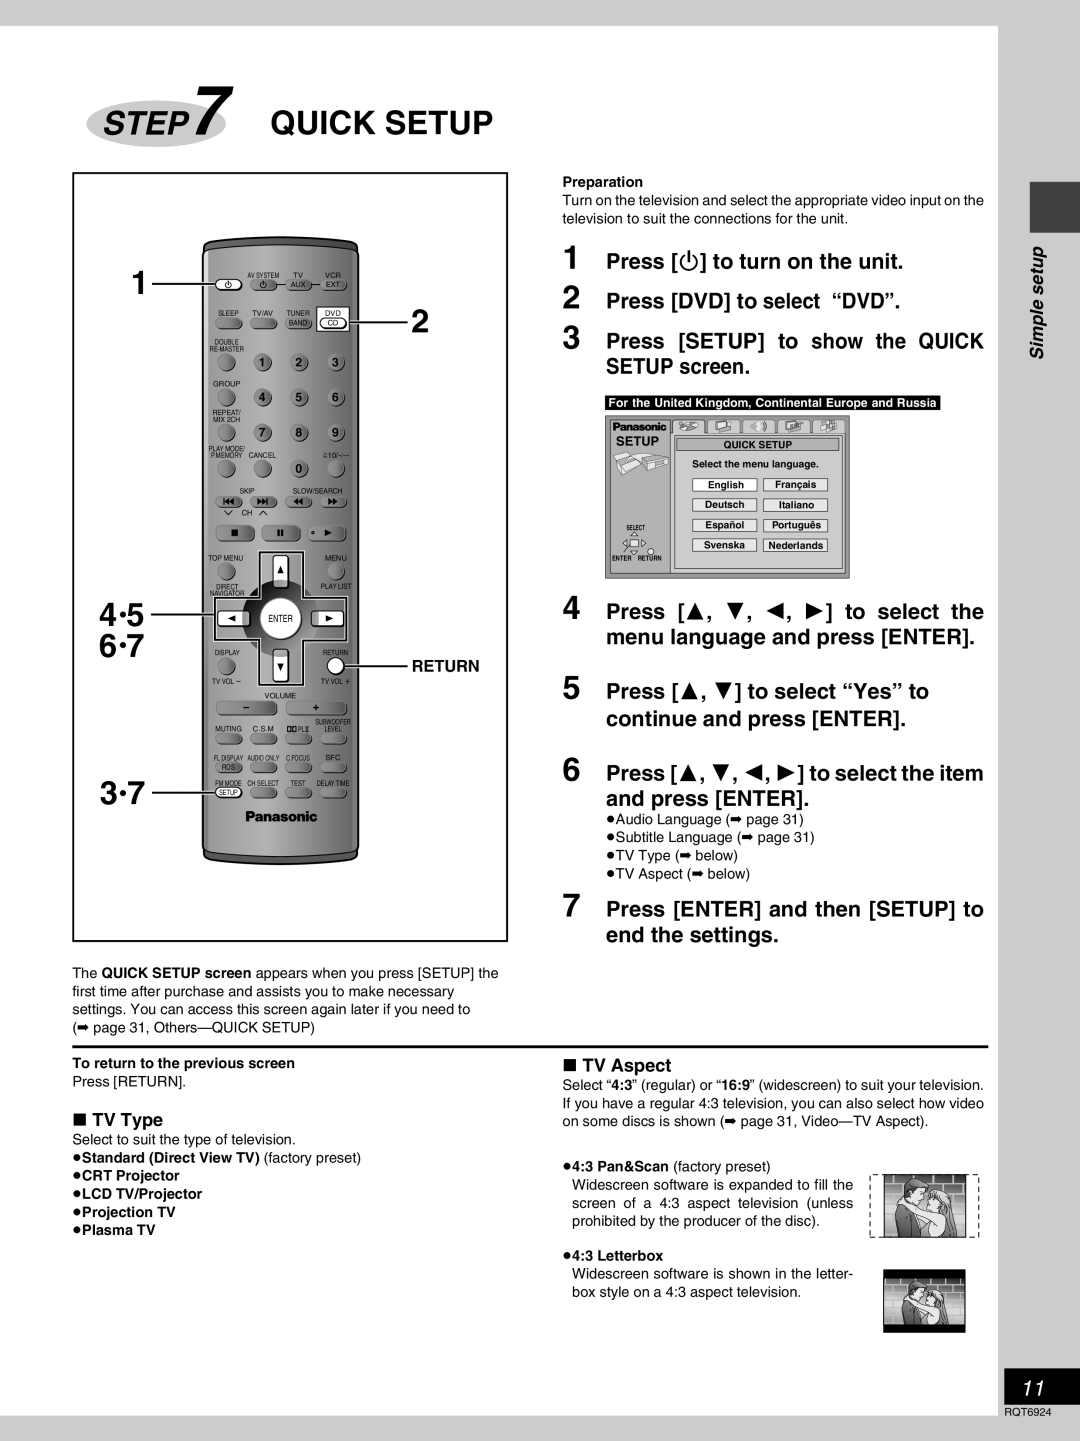 Panasonic SC-DT310 manual Quick Setup, Press Í to turn on the unit, Press DVD to select “DVD”, Simple setup 